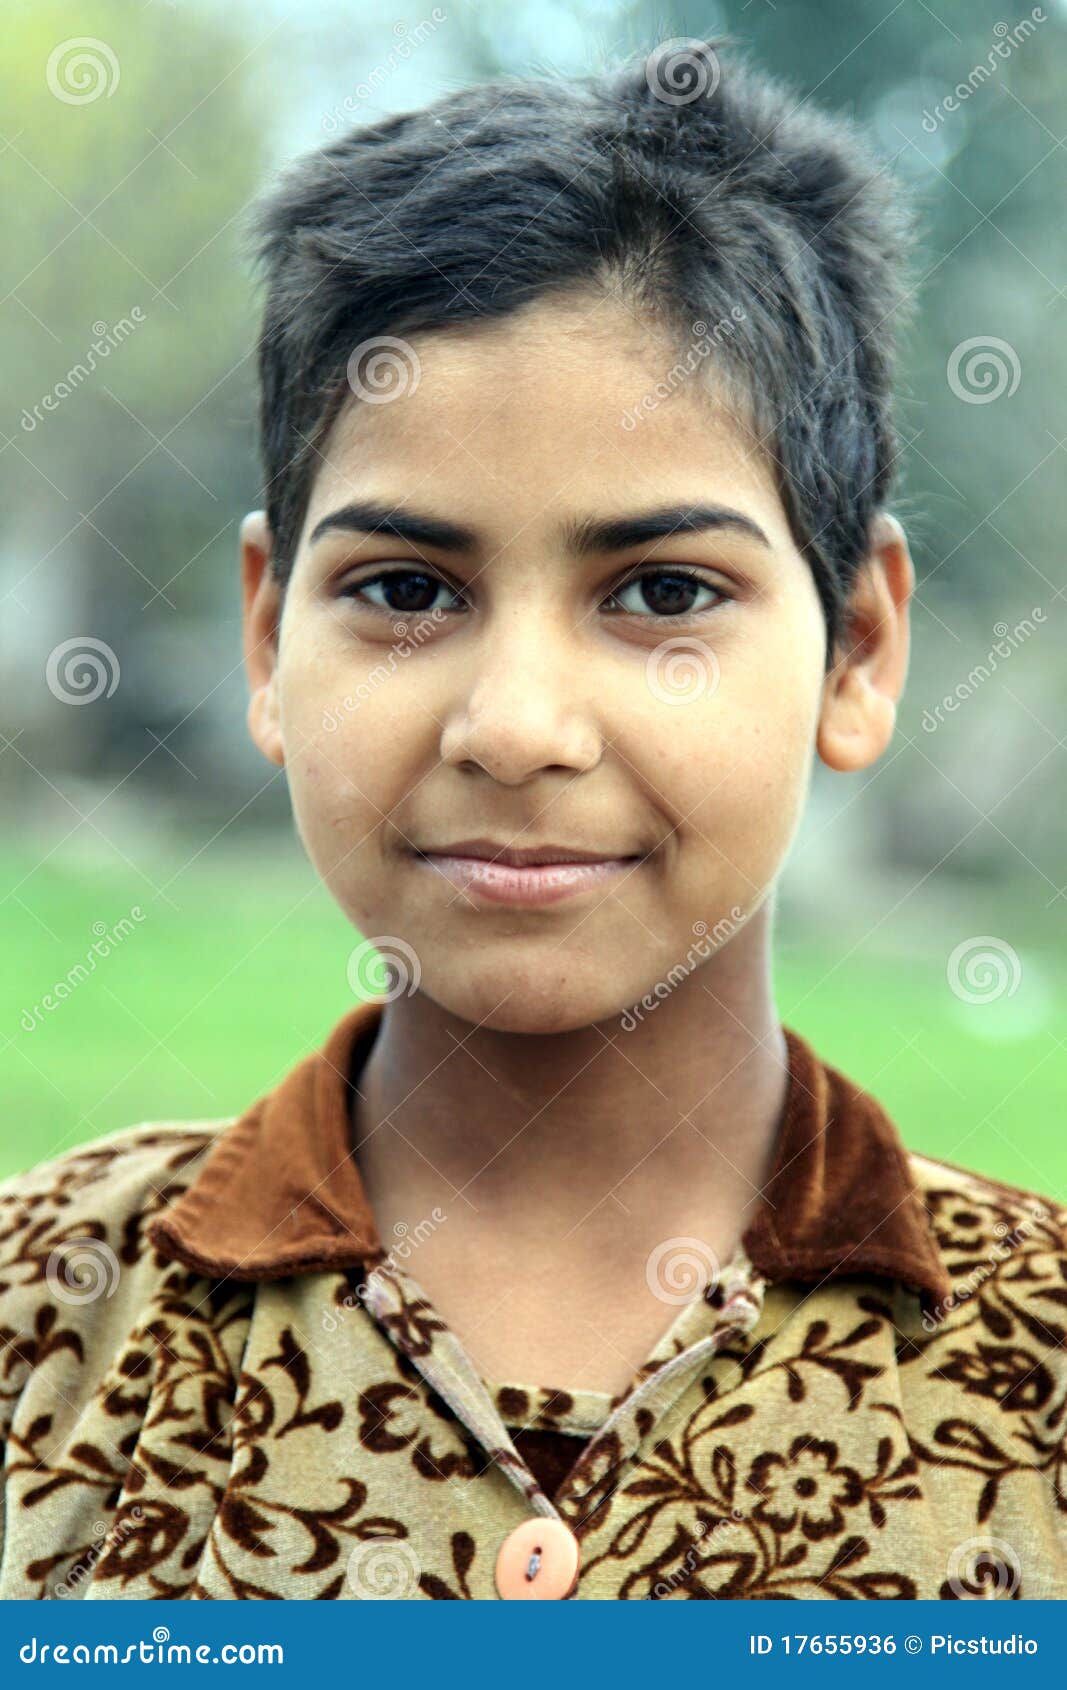 Boycut girl stock photo. Image of smiling, girls, hairstyle - 17655936